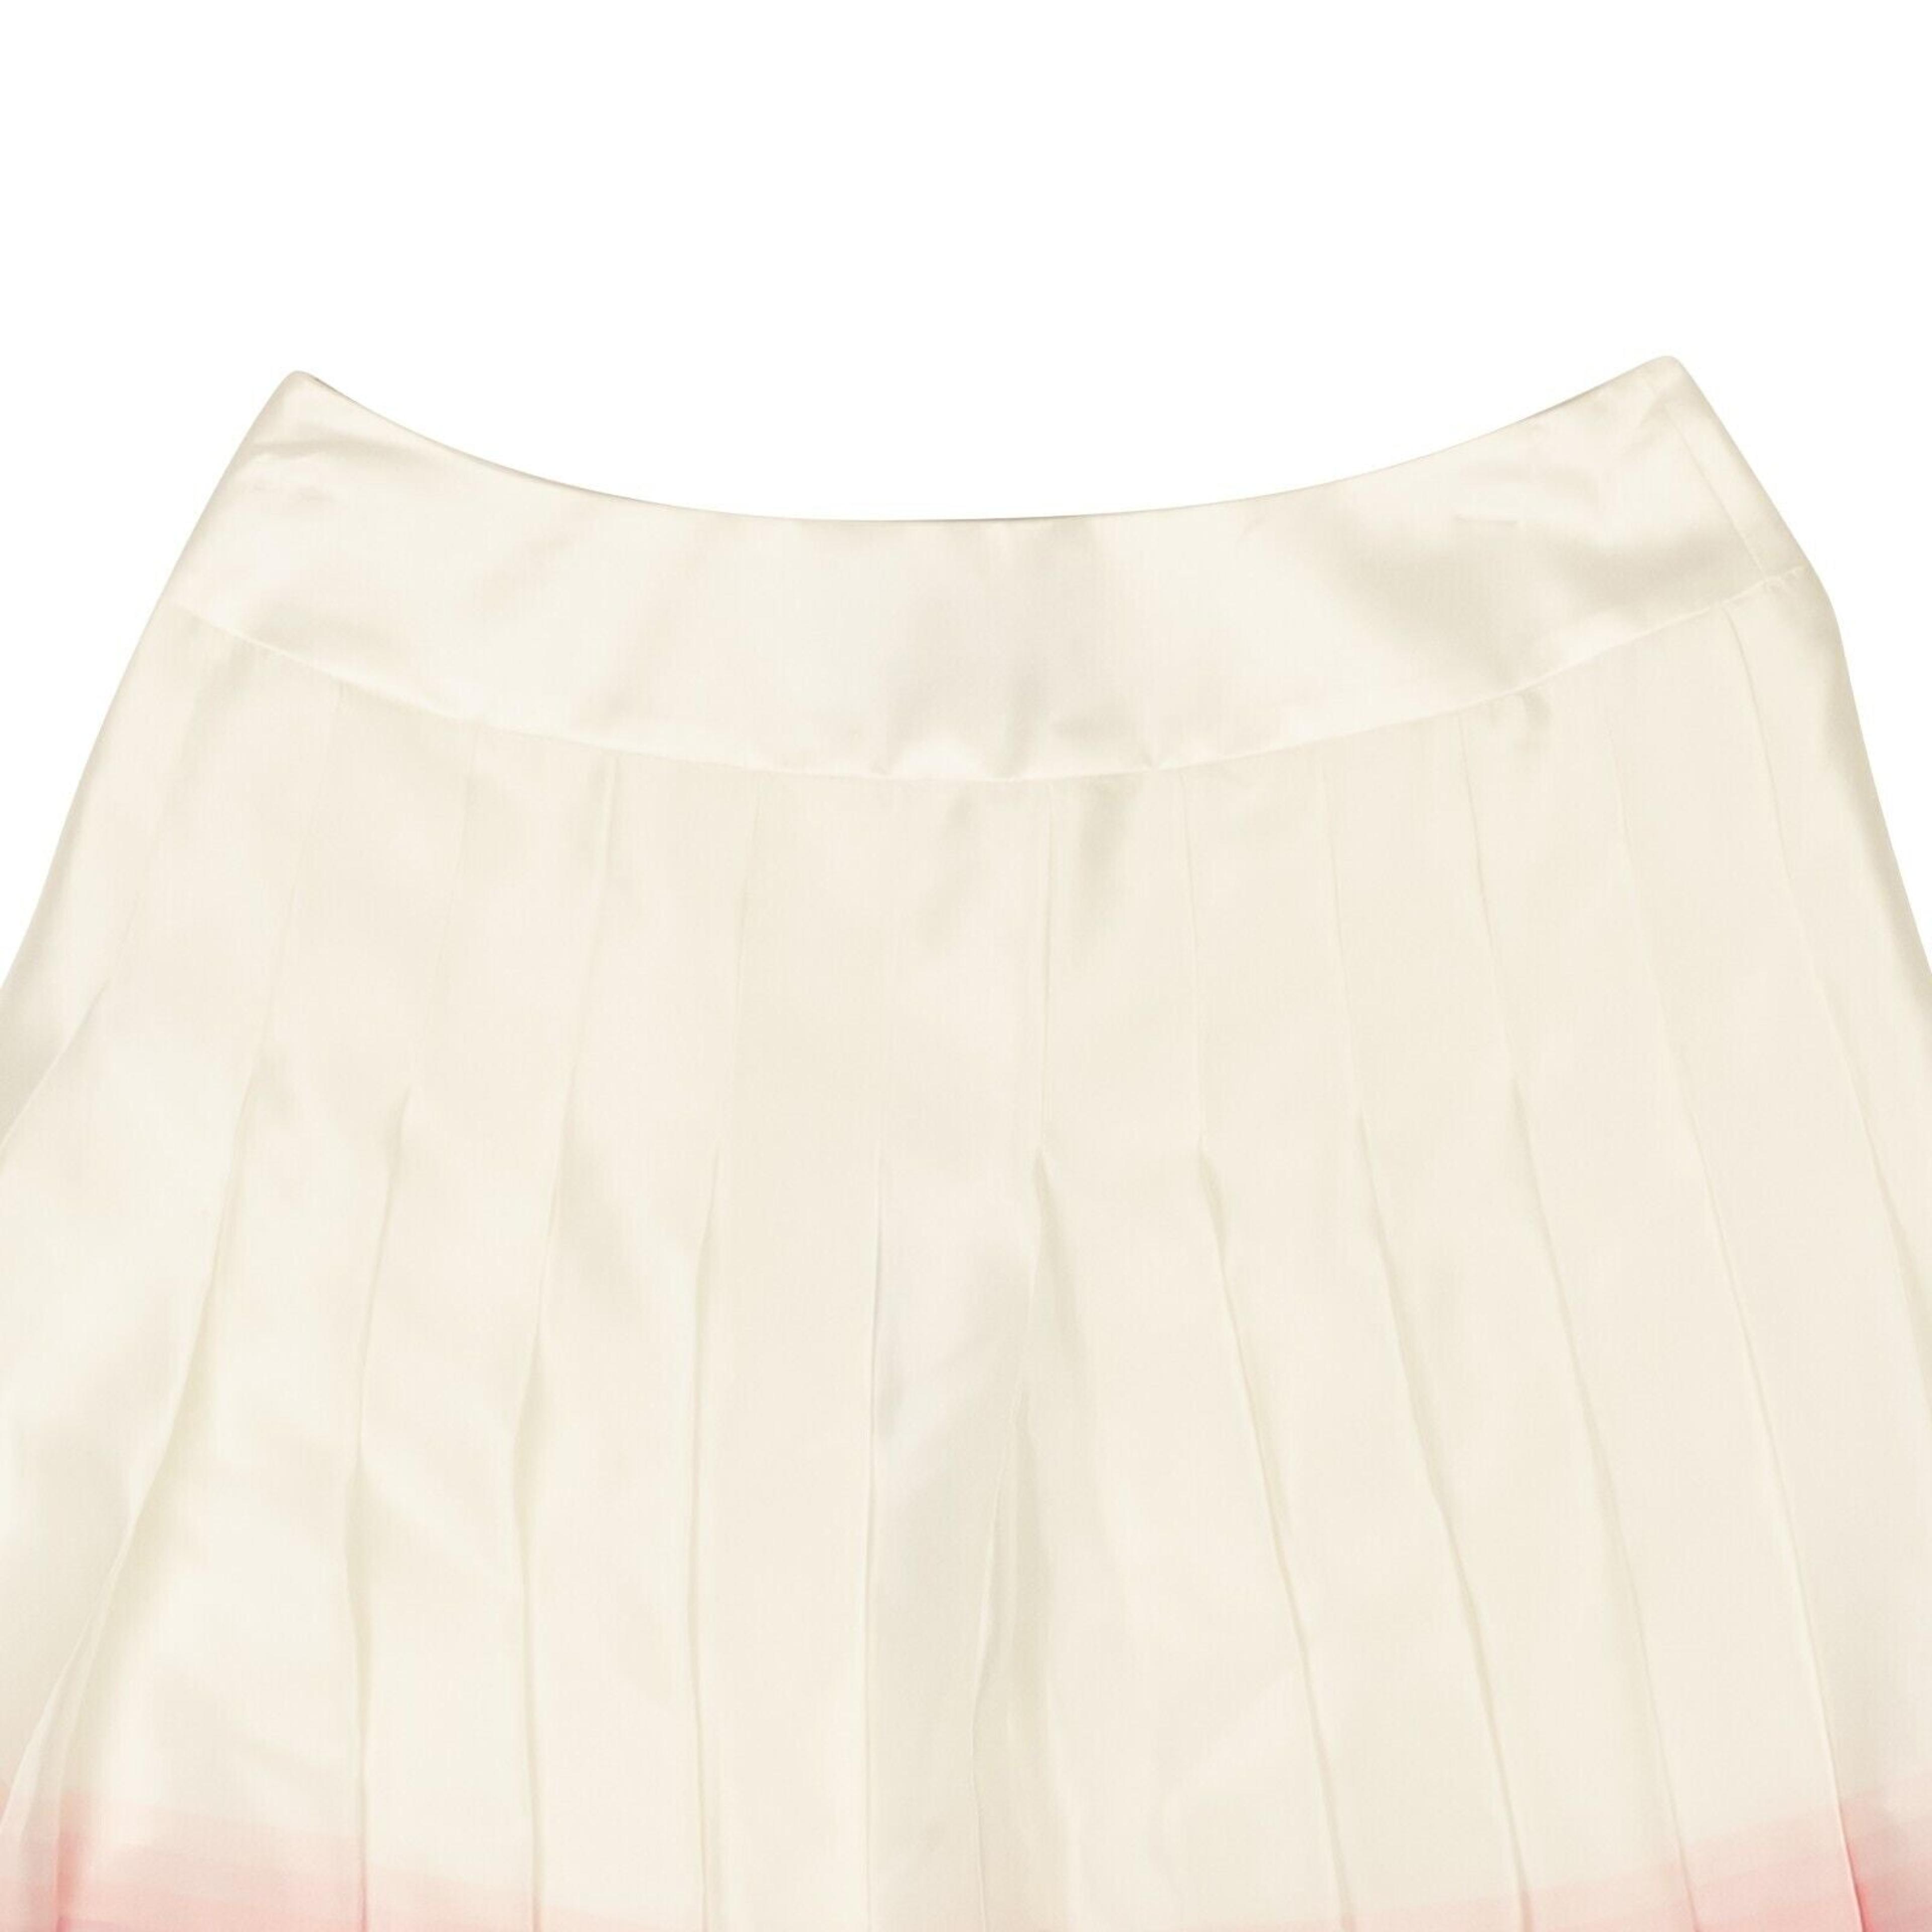 Alternate View 3 of White Satin Pleated Tennis Club Mini Skirt